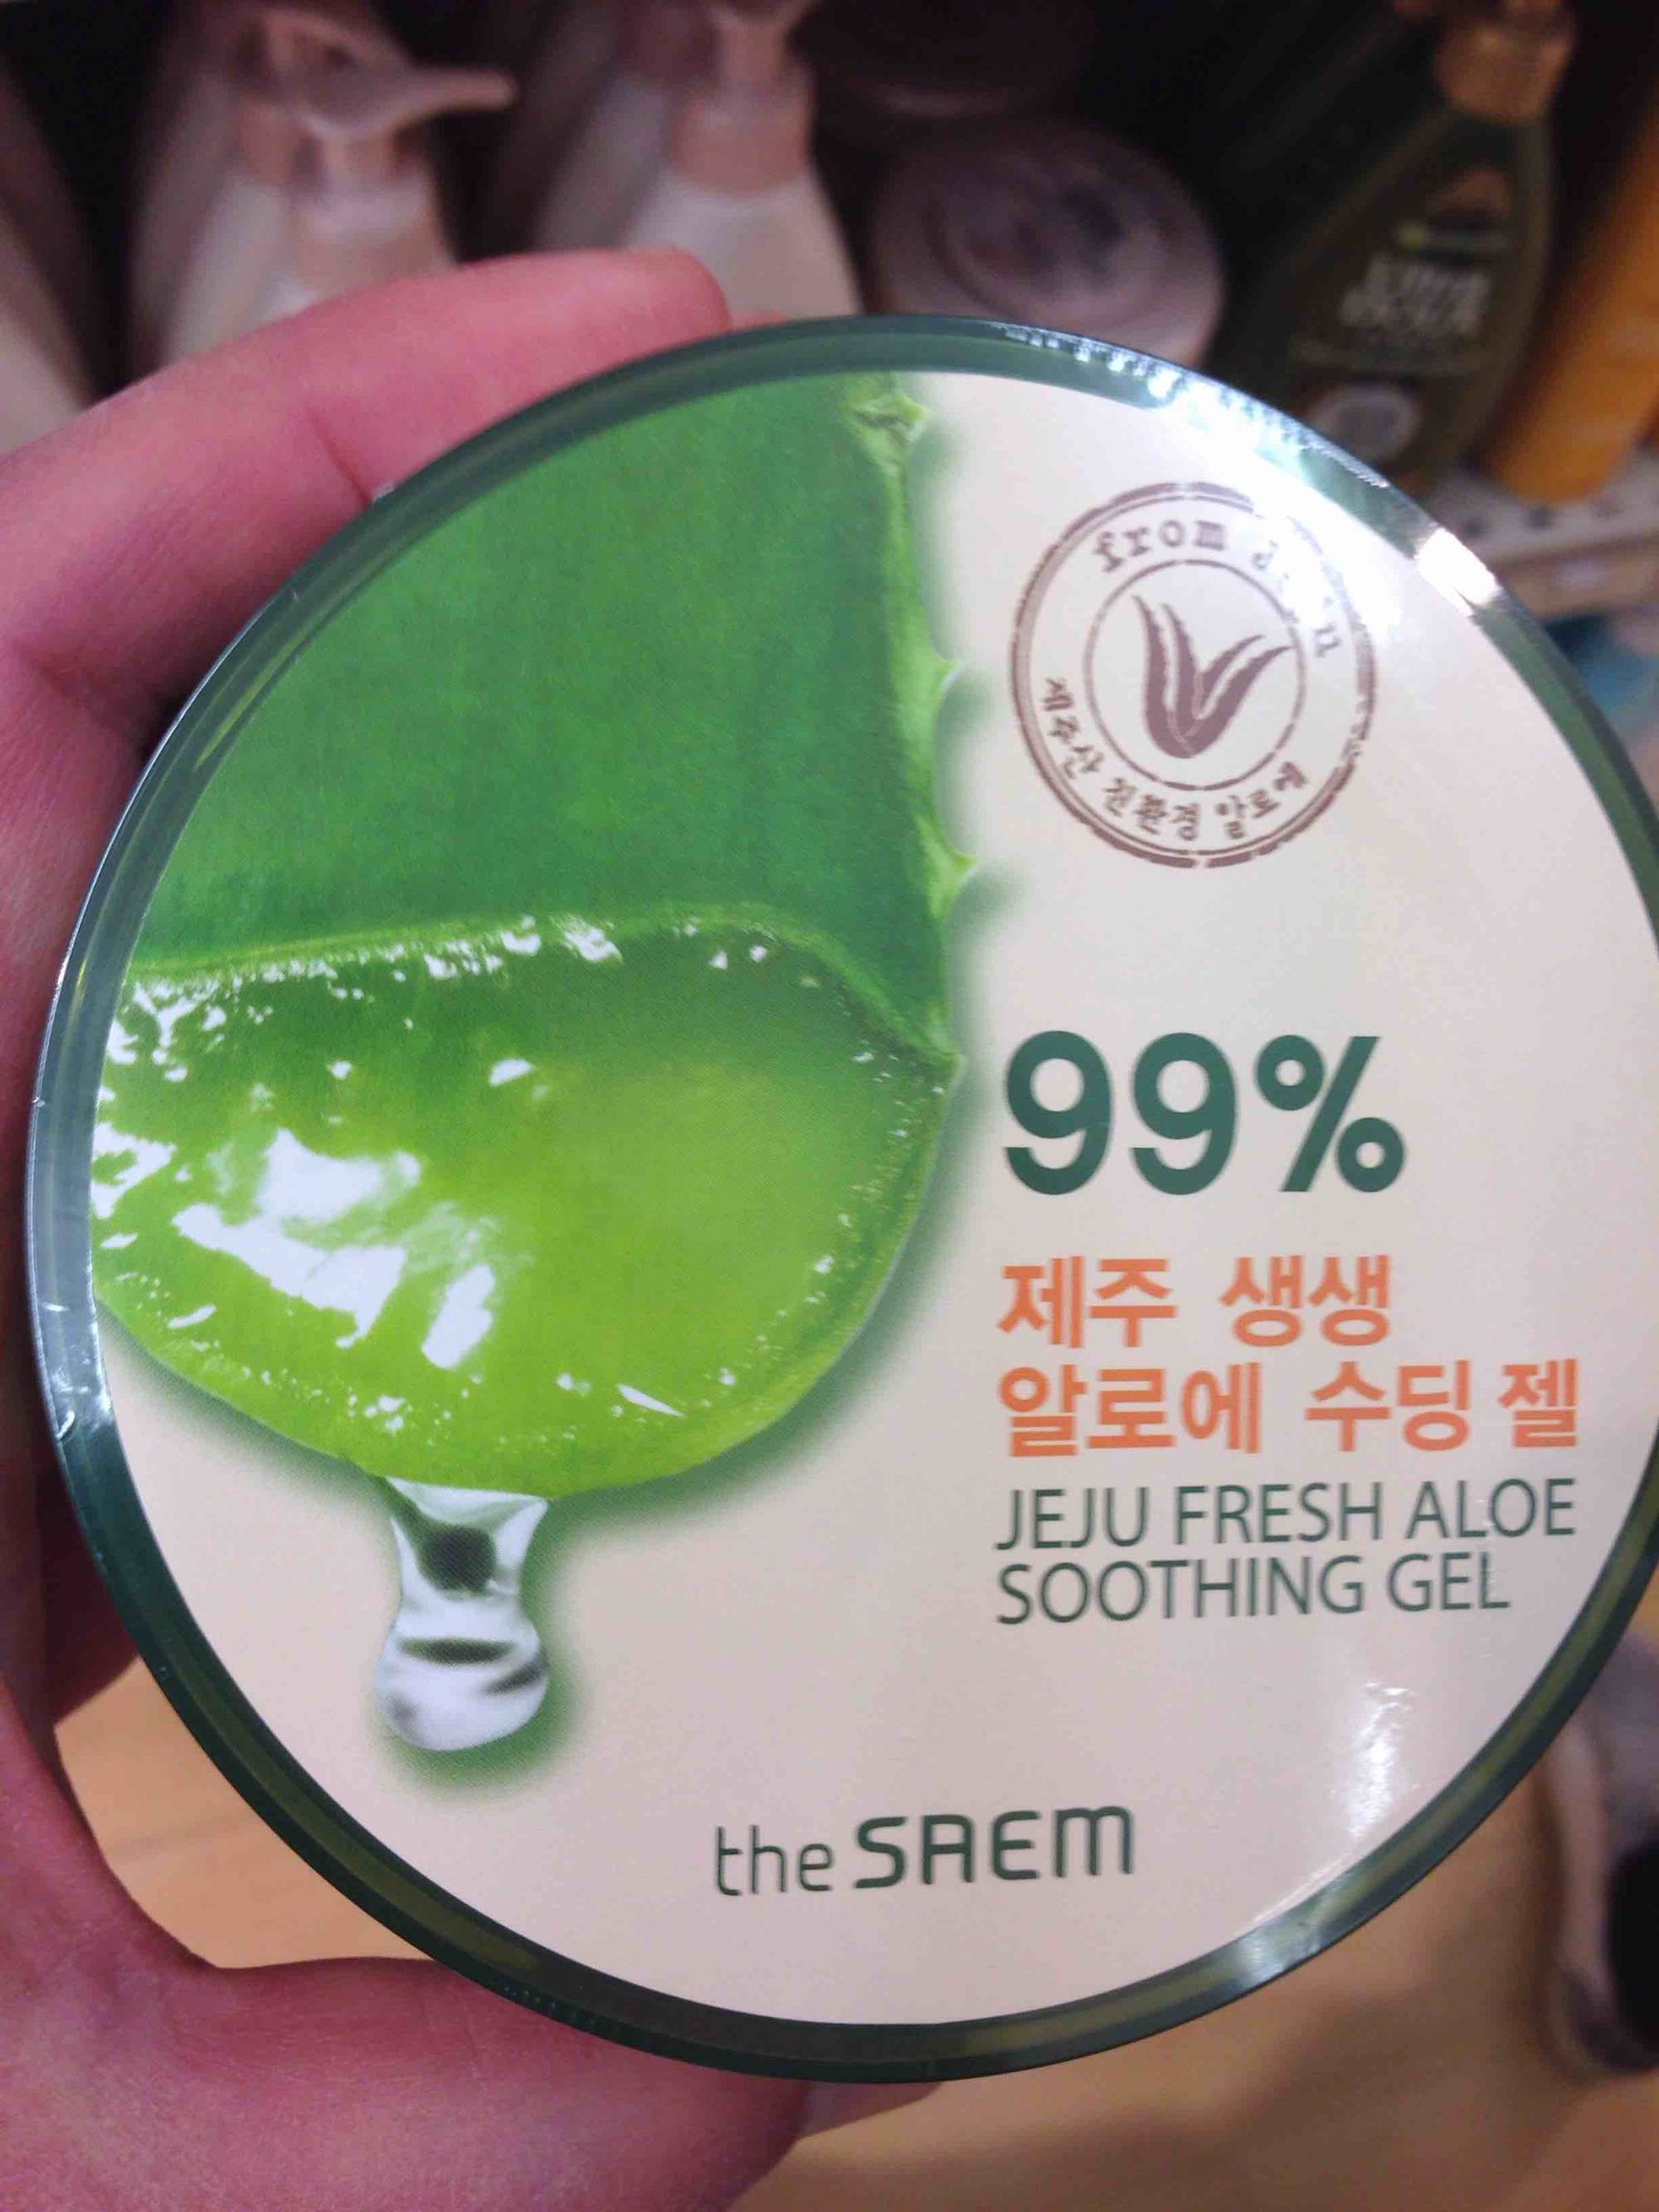 THE SAEM - Jeju fresh aloe soothing gel